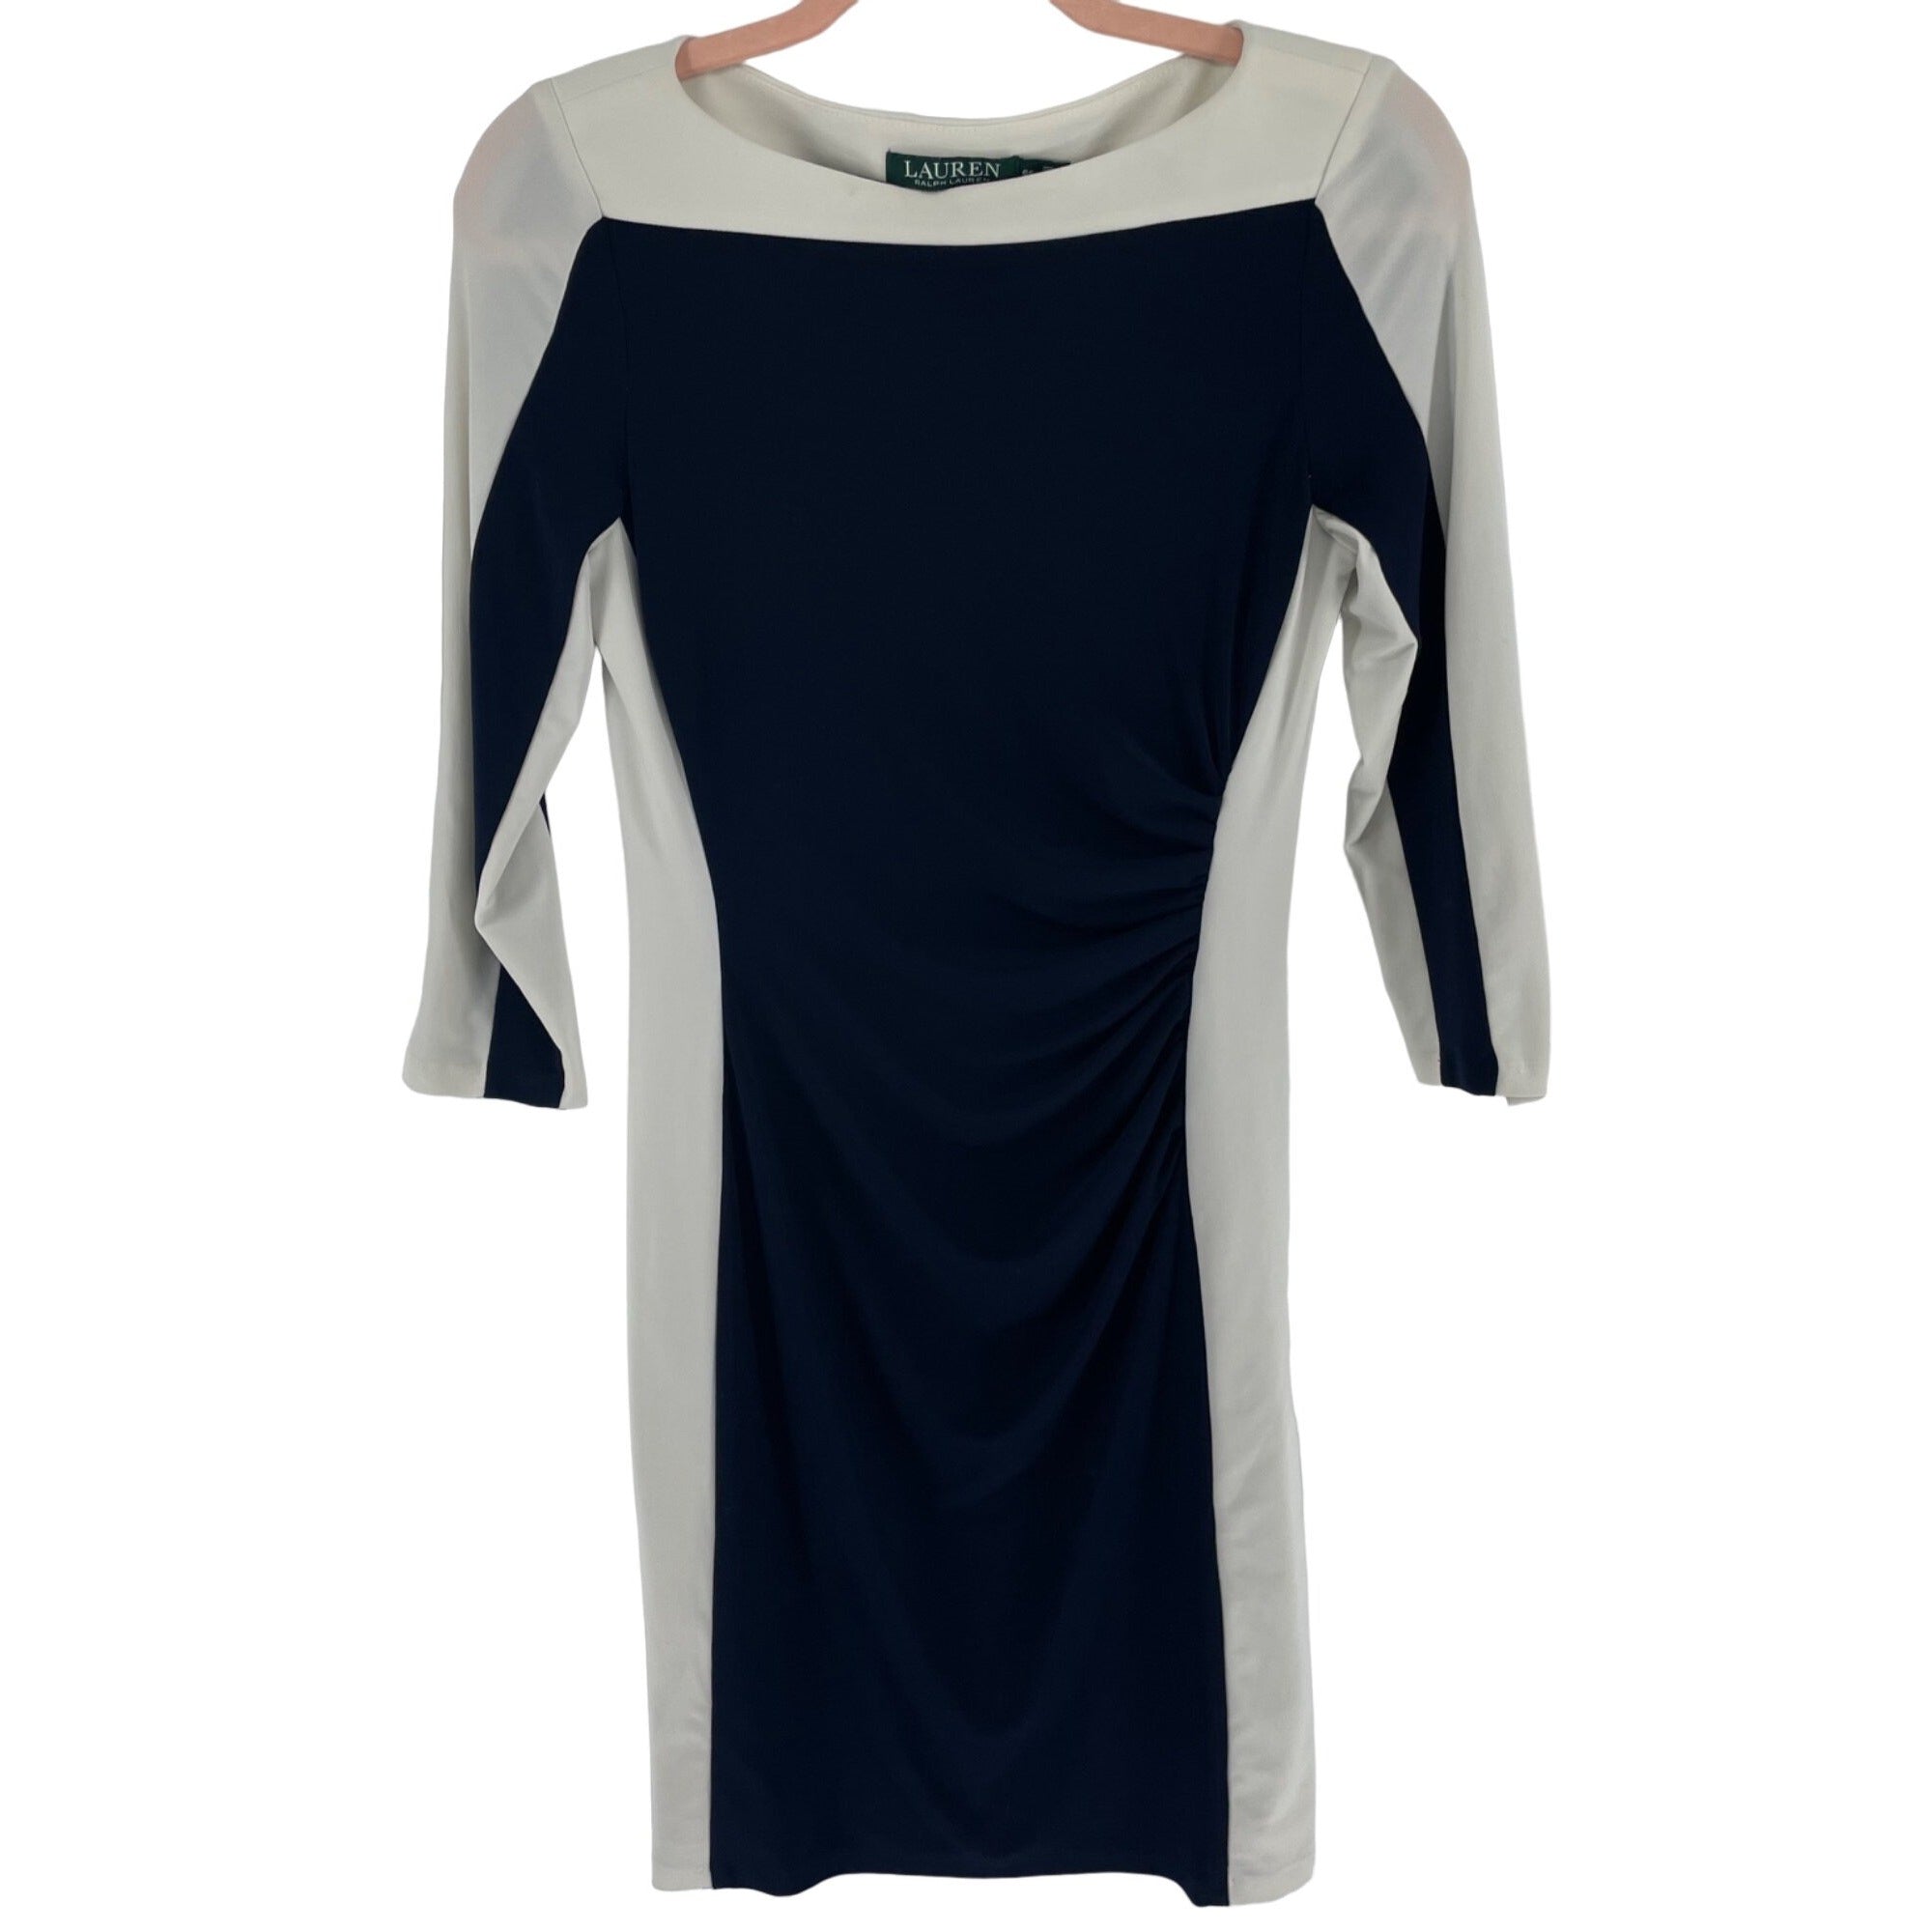 Ralph Lauren Women's Size 6P Navy Blue & White Long-Sleeved Sheath Dress